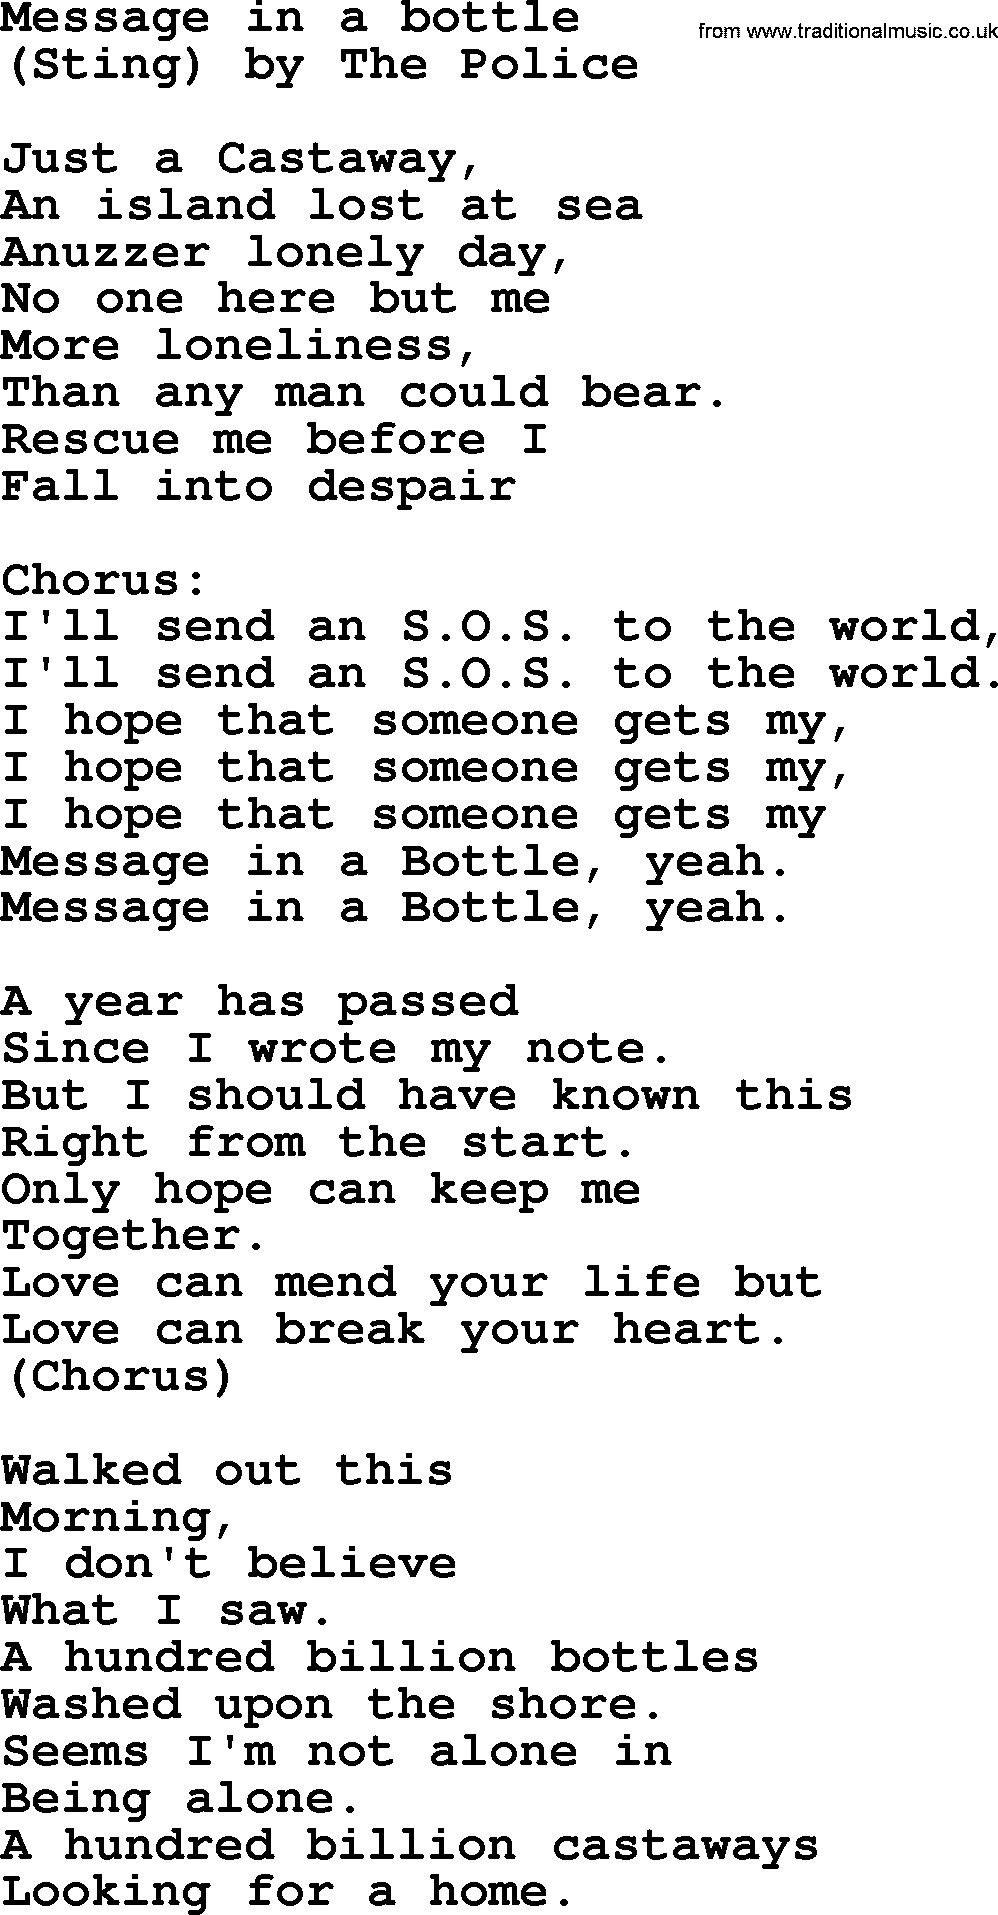 Message in a bottle lyrics